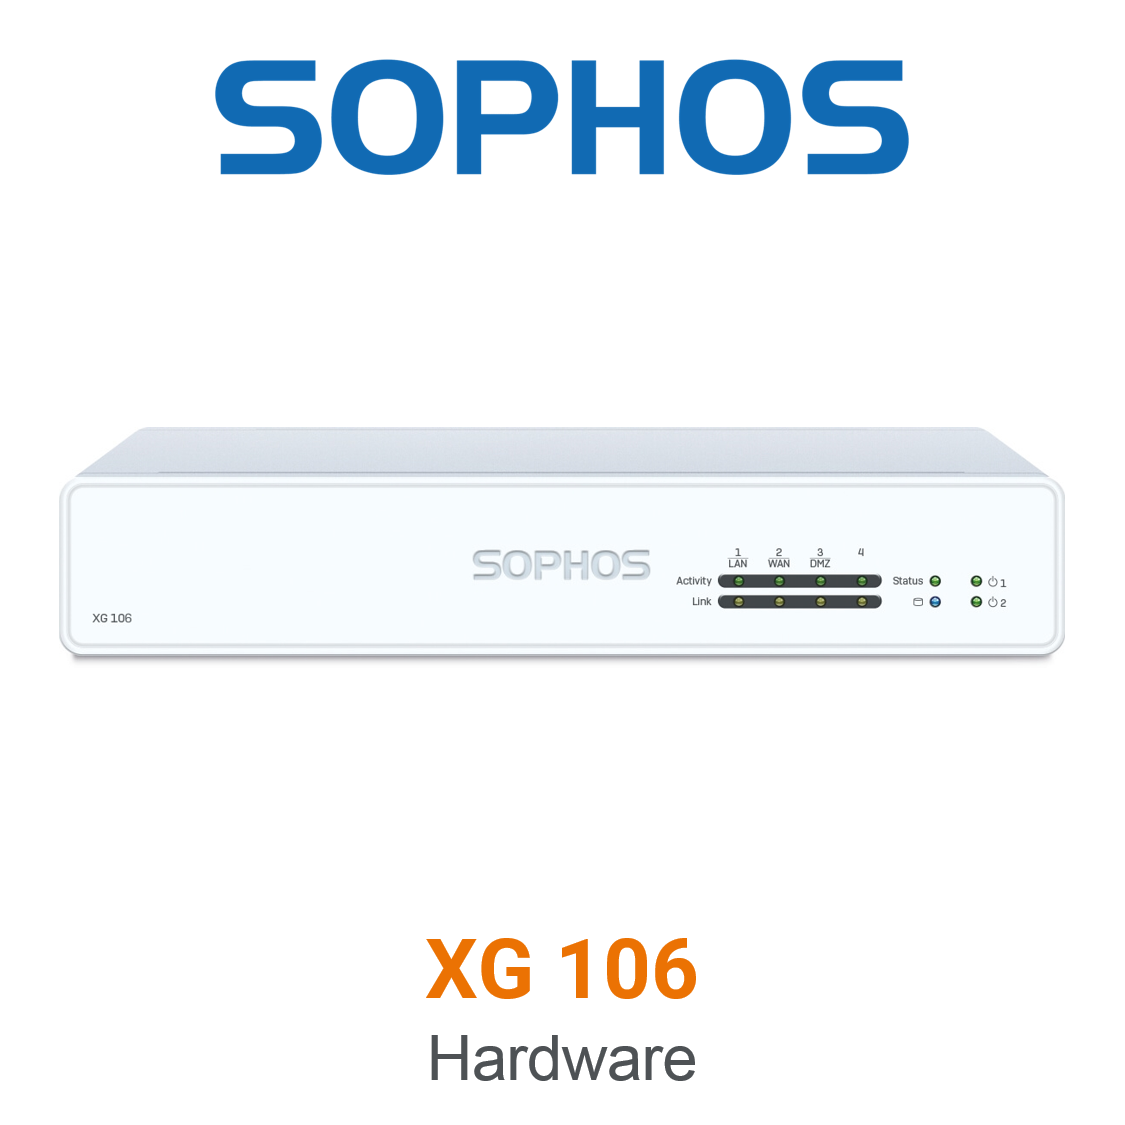 Sophos XG 106 Security Appliance